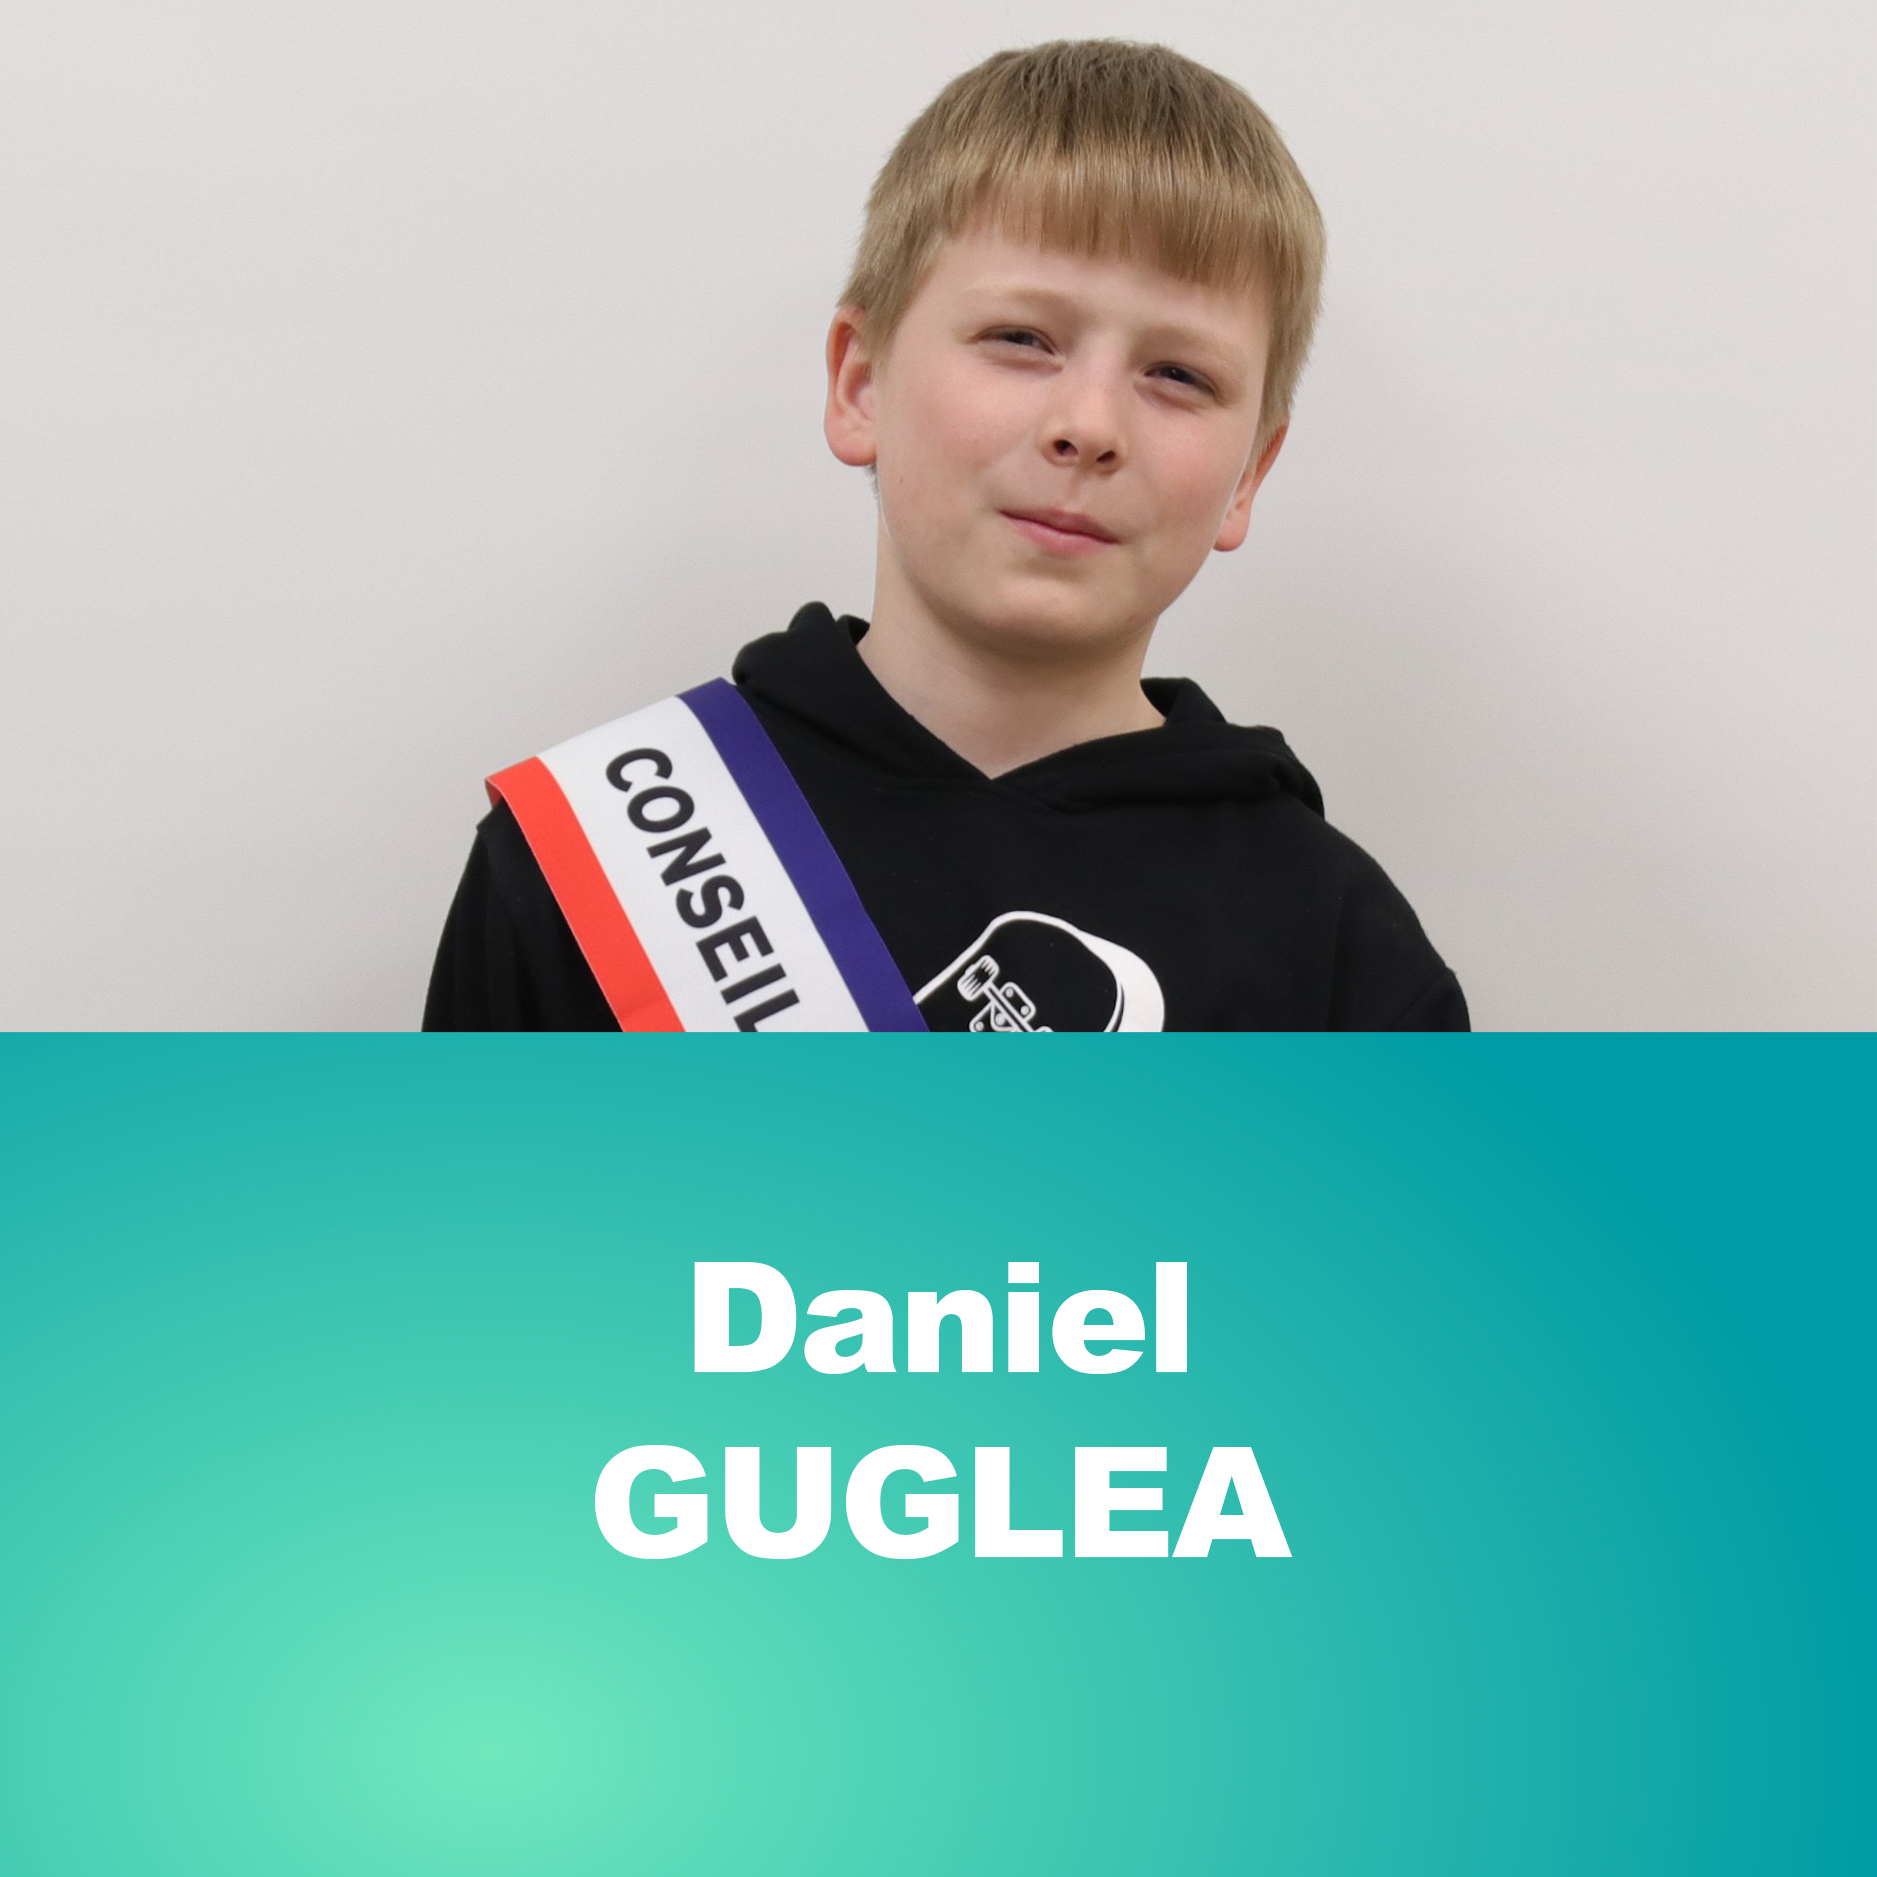 DANIEL-GUGLEA.jpg